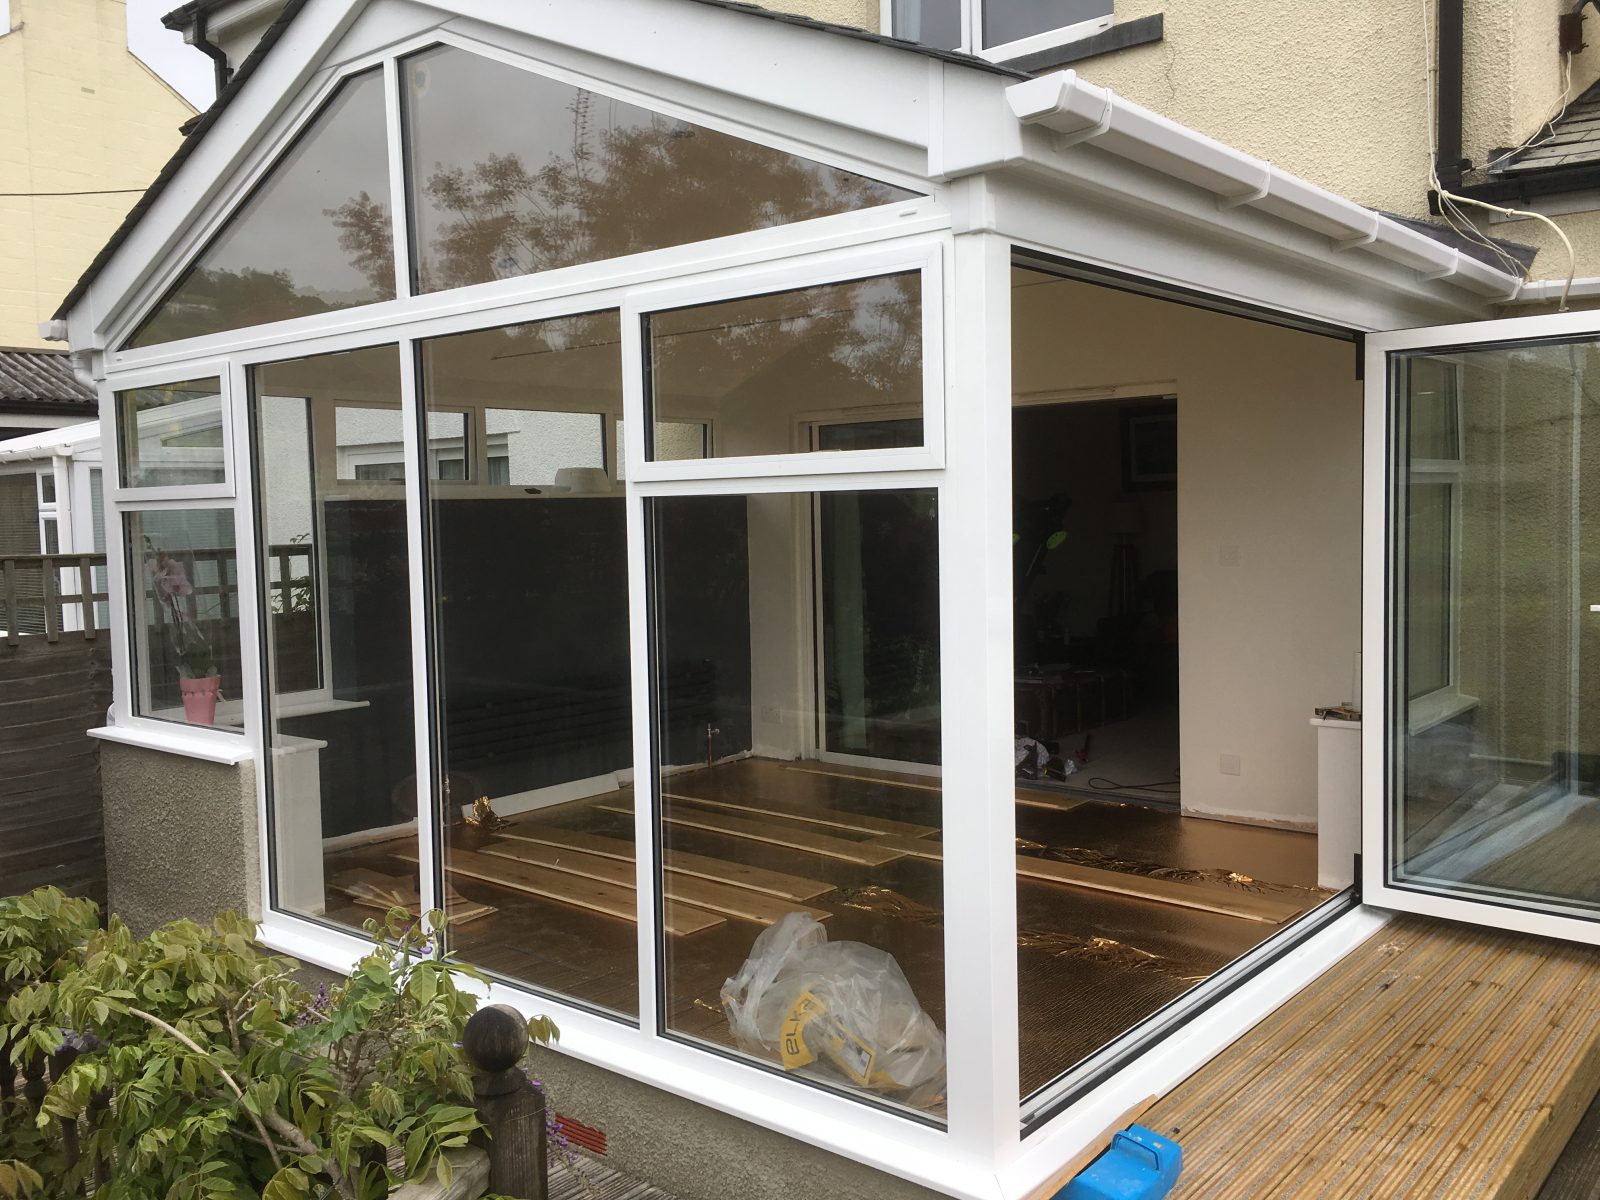 Hewlett case study, aluminium conservatory with SupaLite roof